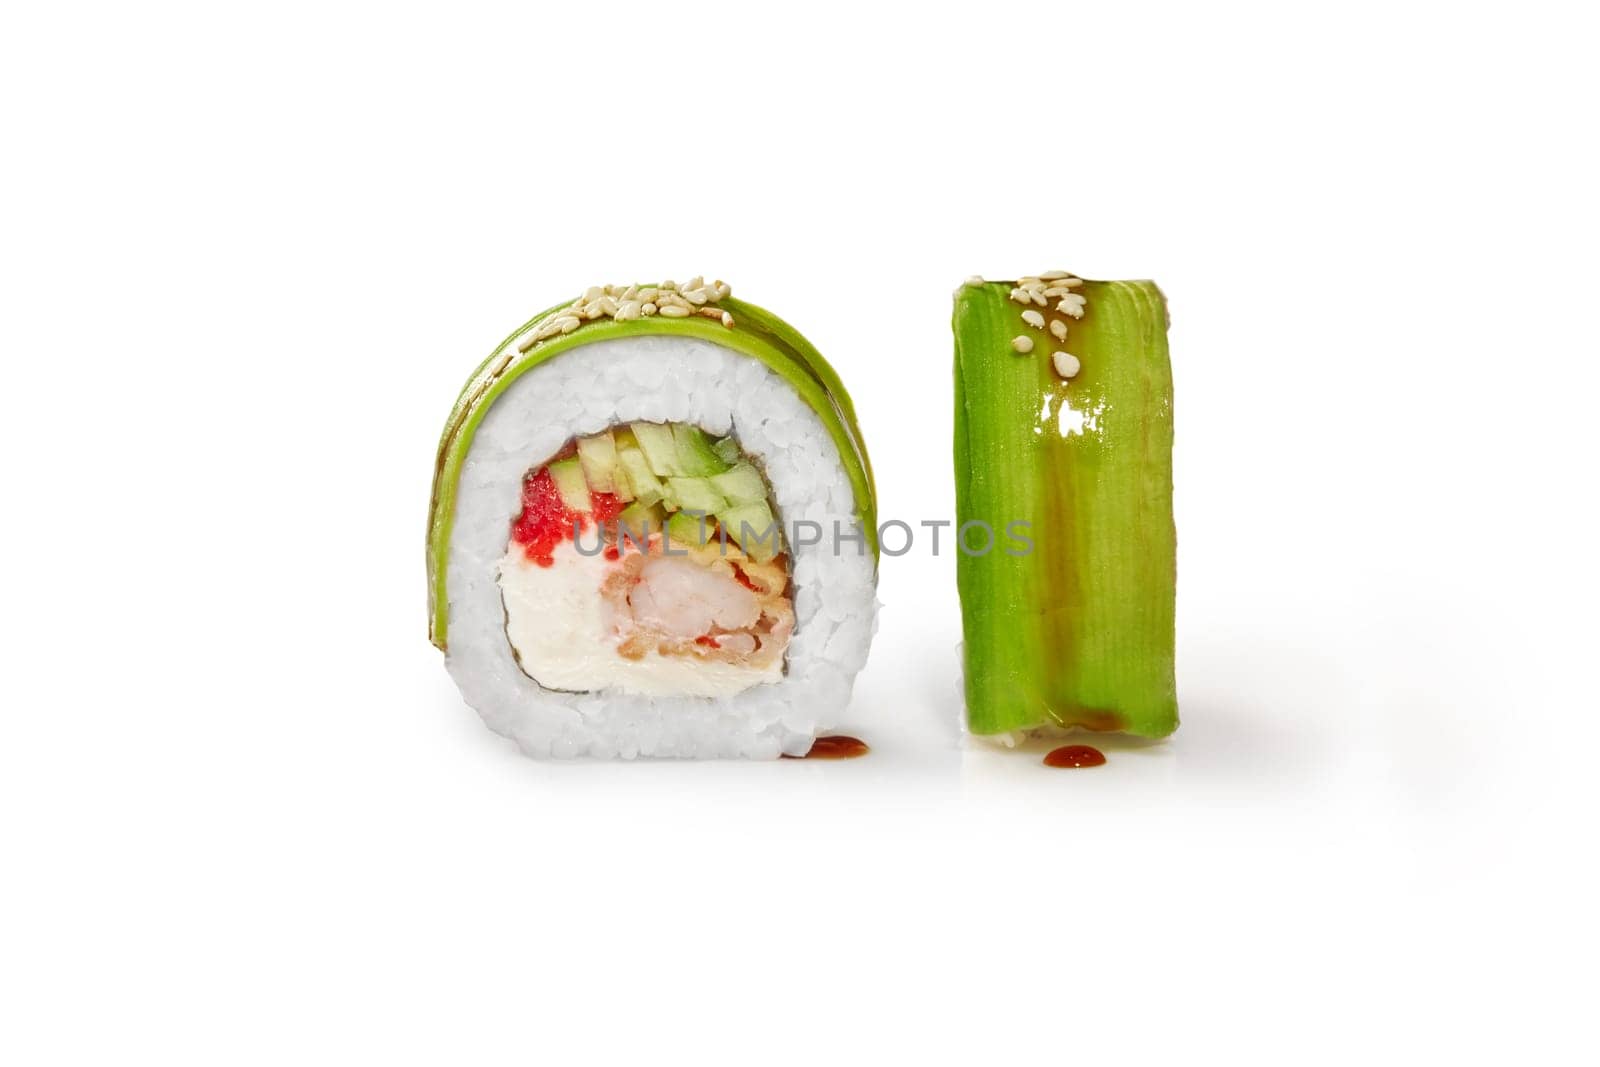 Avocado sushi roll with tempura shrimp and tobiko on white by nazarovsergey